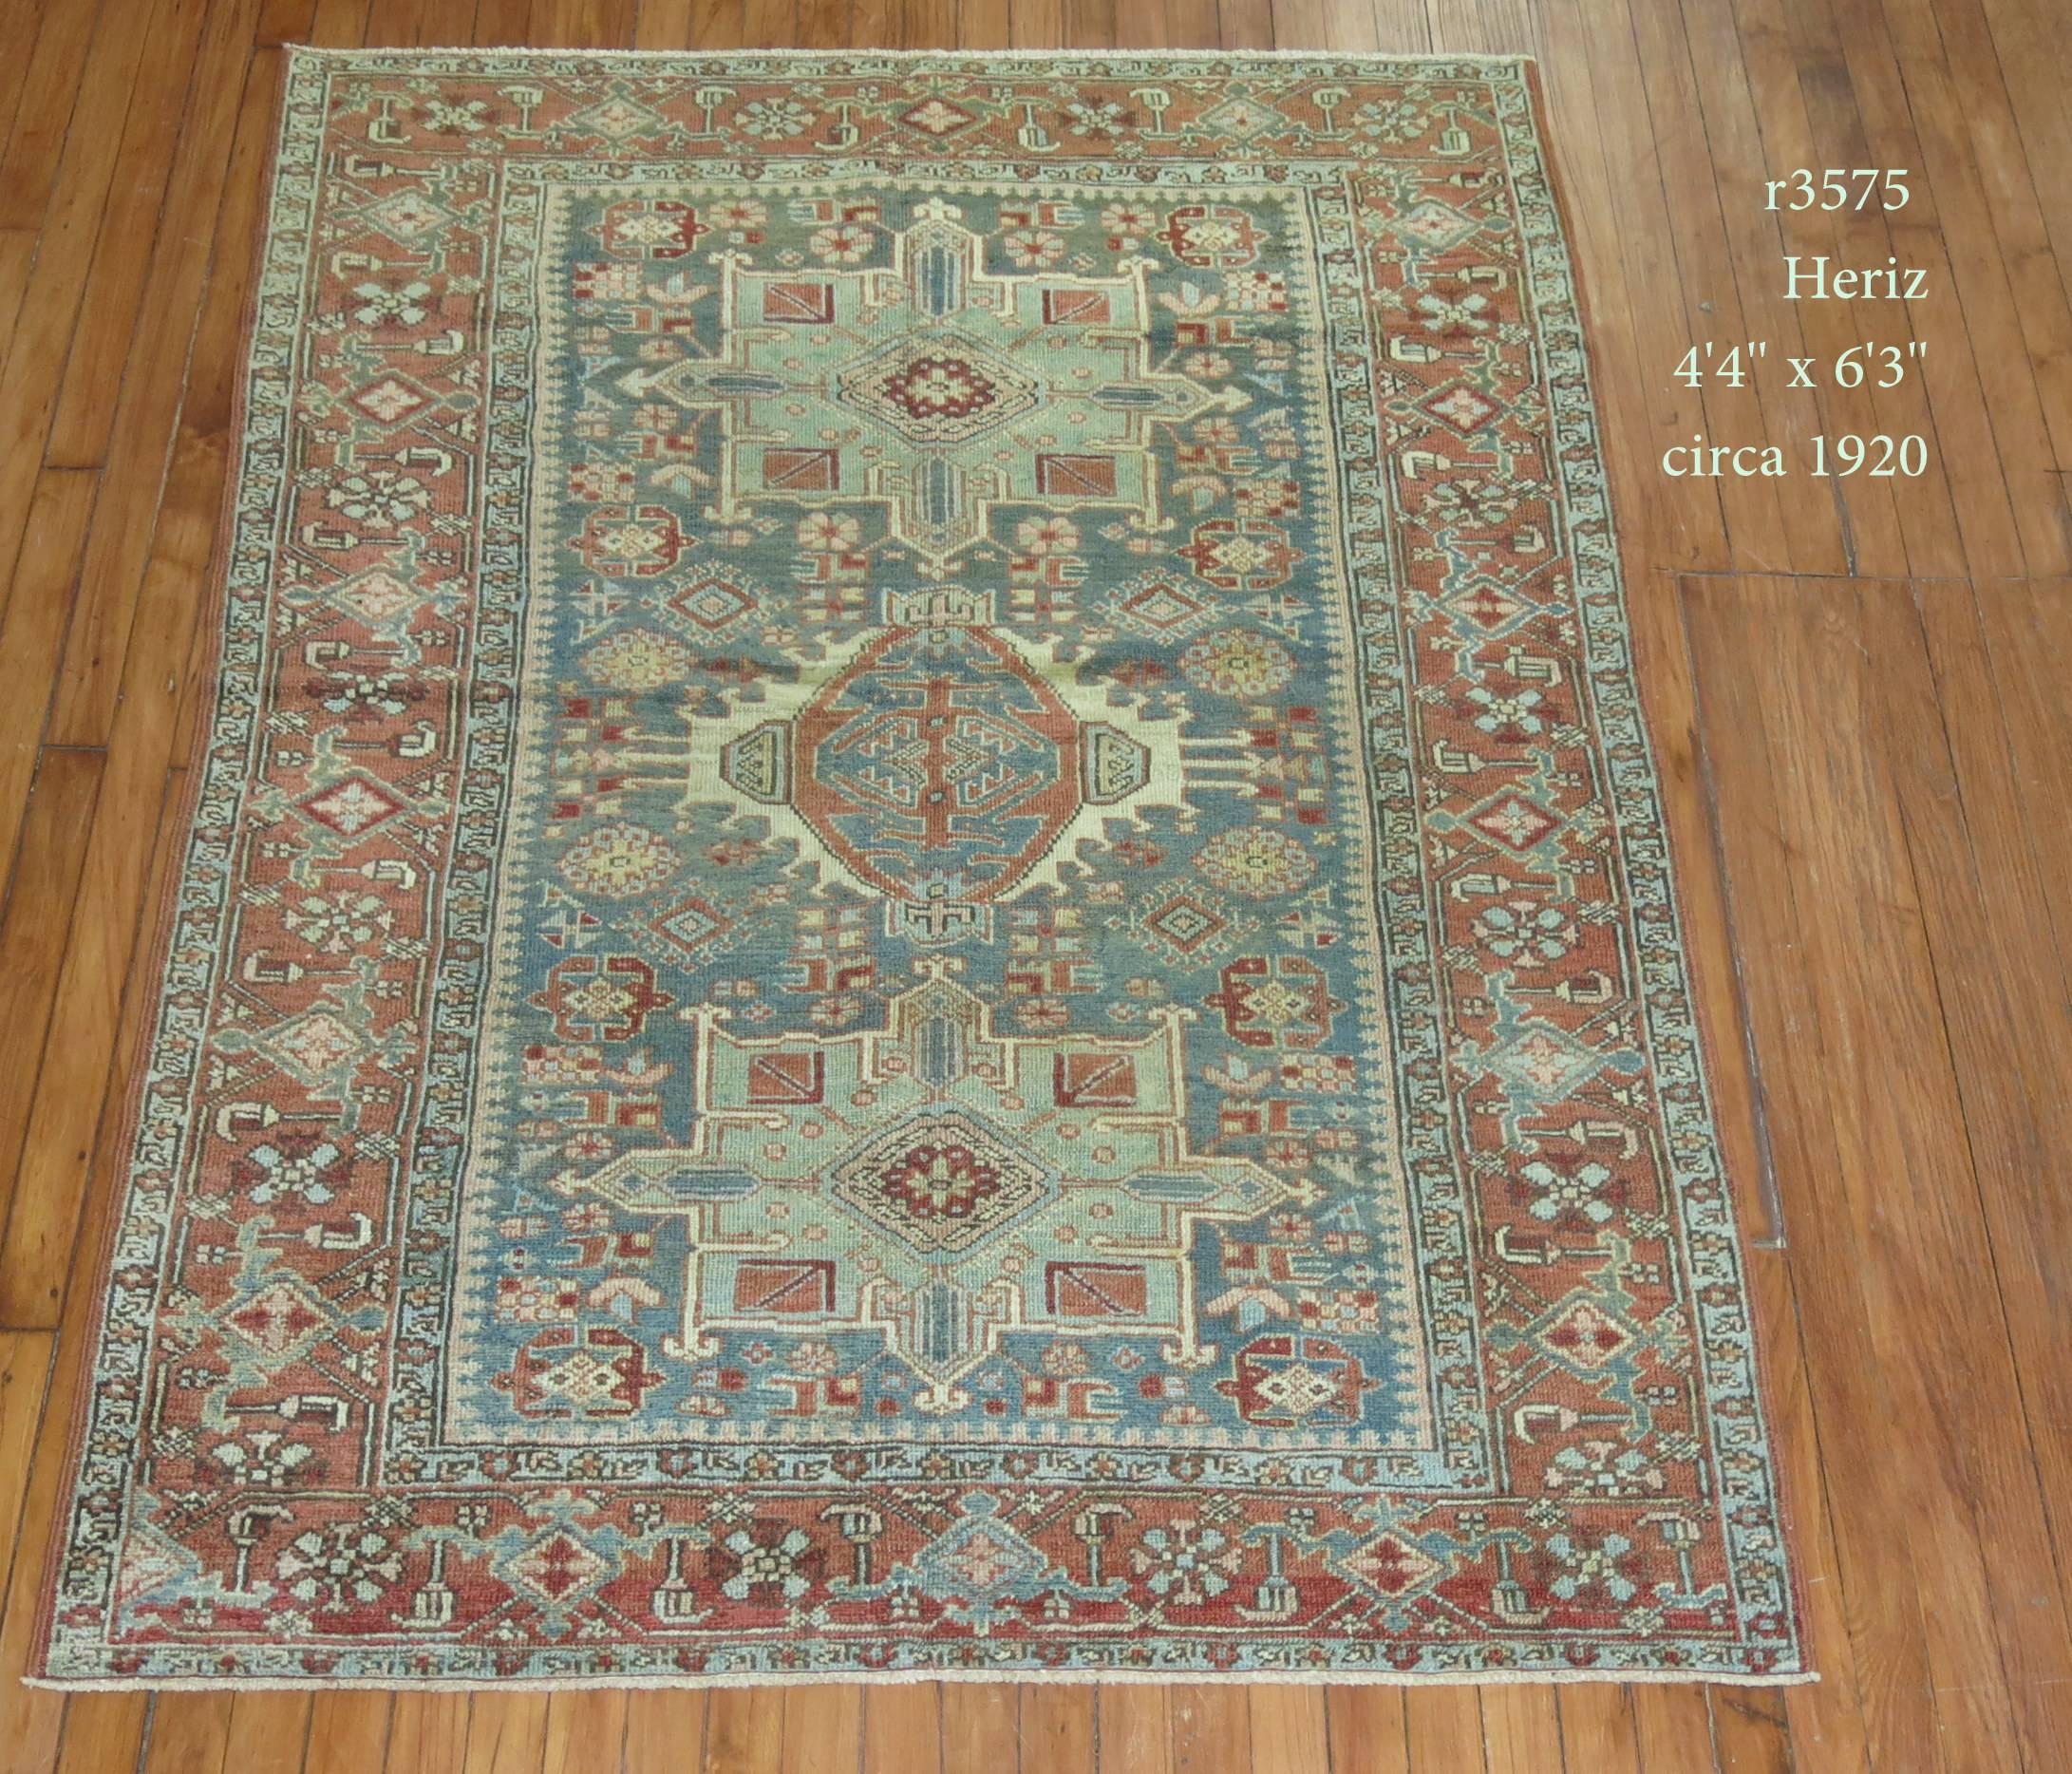 An early 20th century Persian Heriz Karadja rug in earth tones. Gray, green, brick, light blue are the dominant colors,

circa 1920. Measures: 4'4